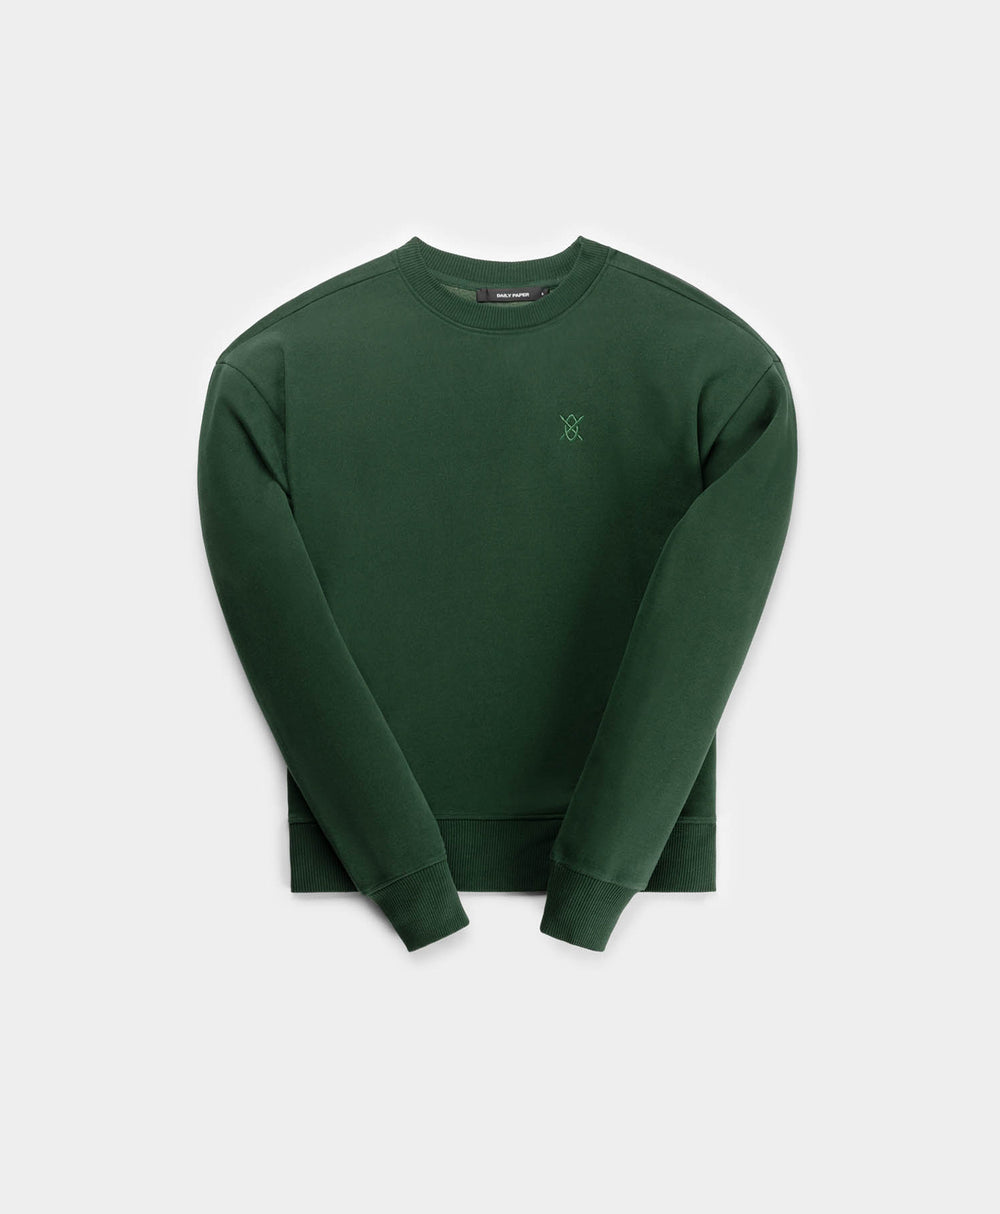 DP - Pine Green Ragla Sweater - Packshot - Rear